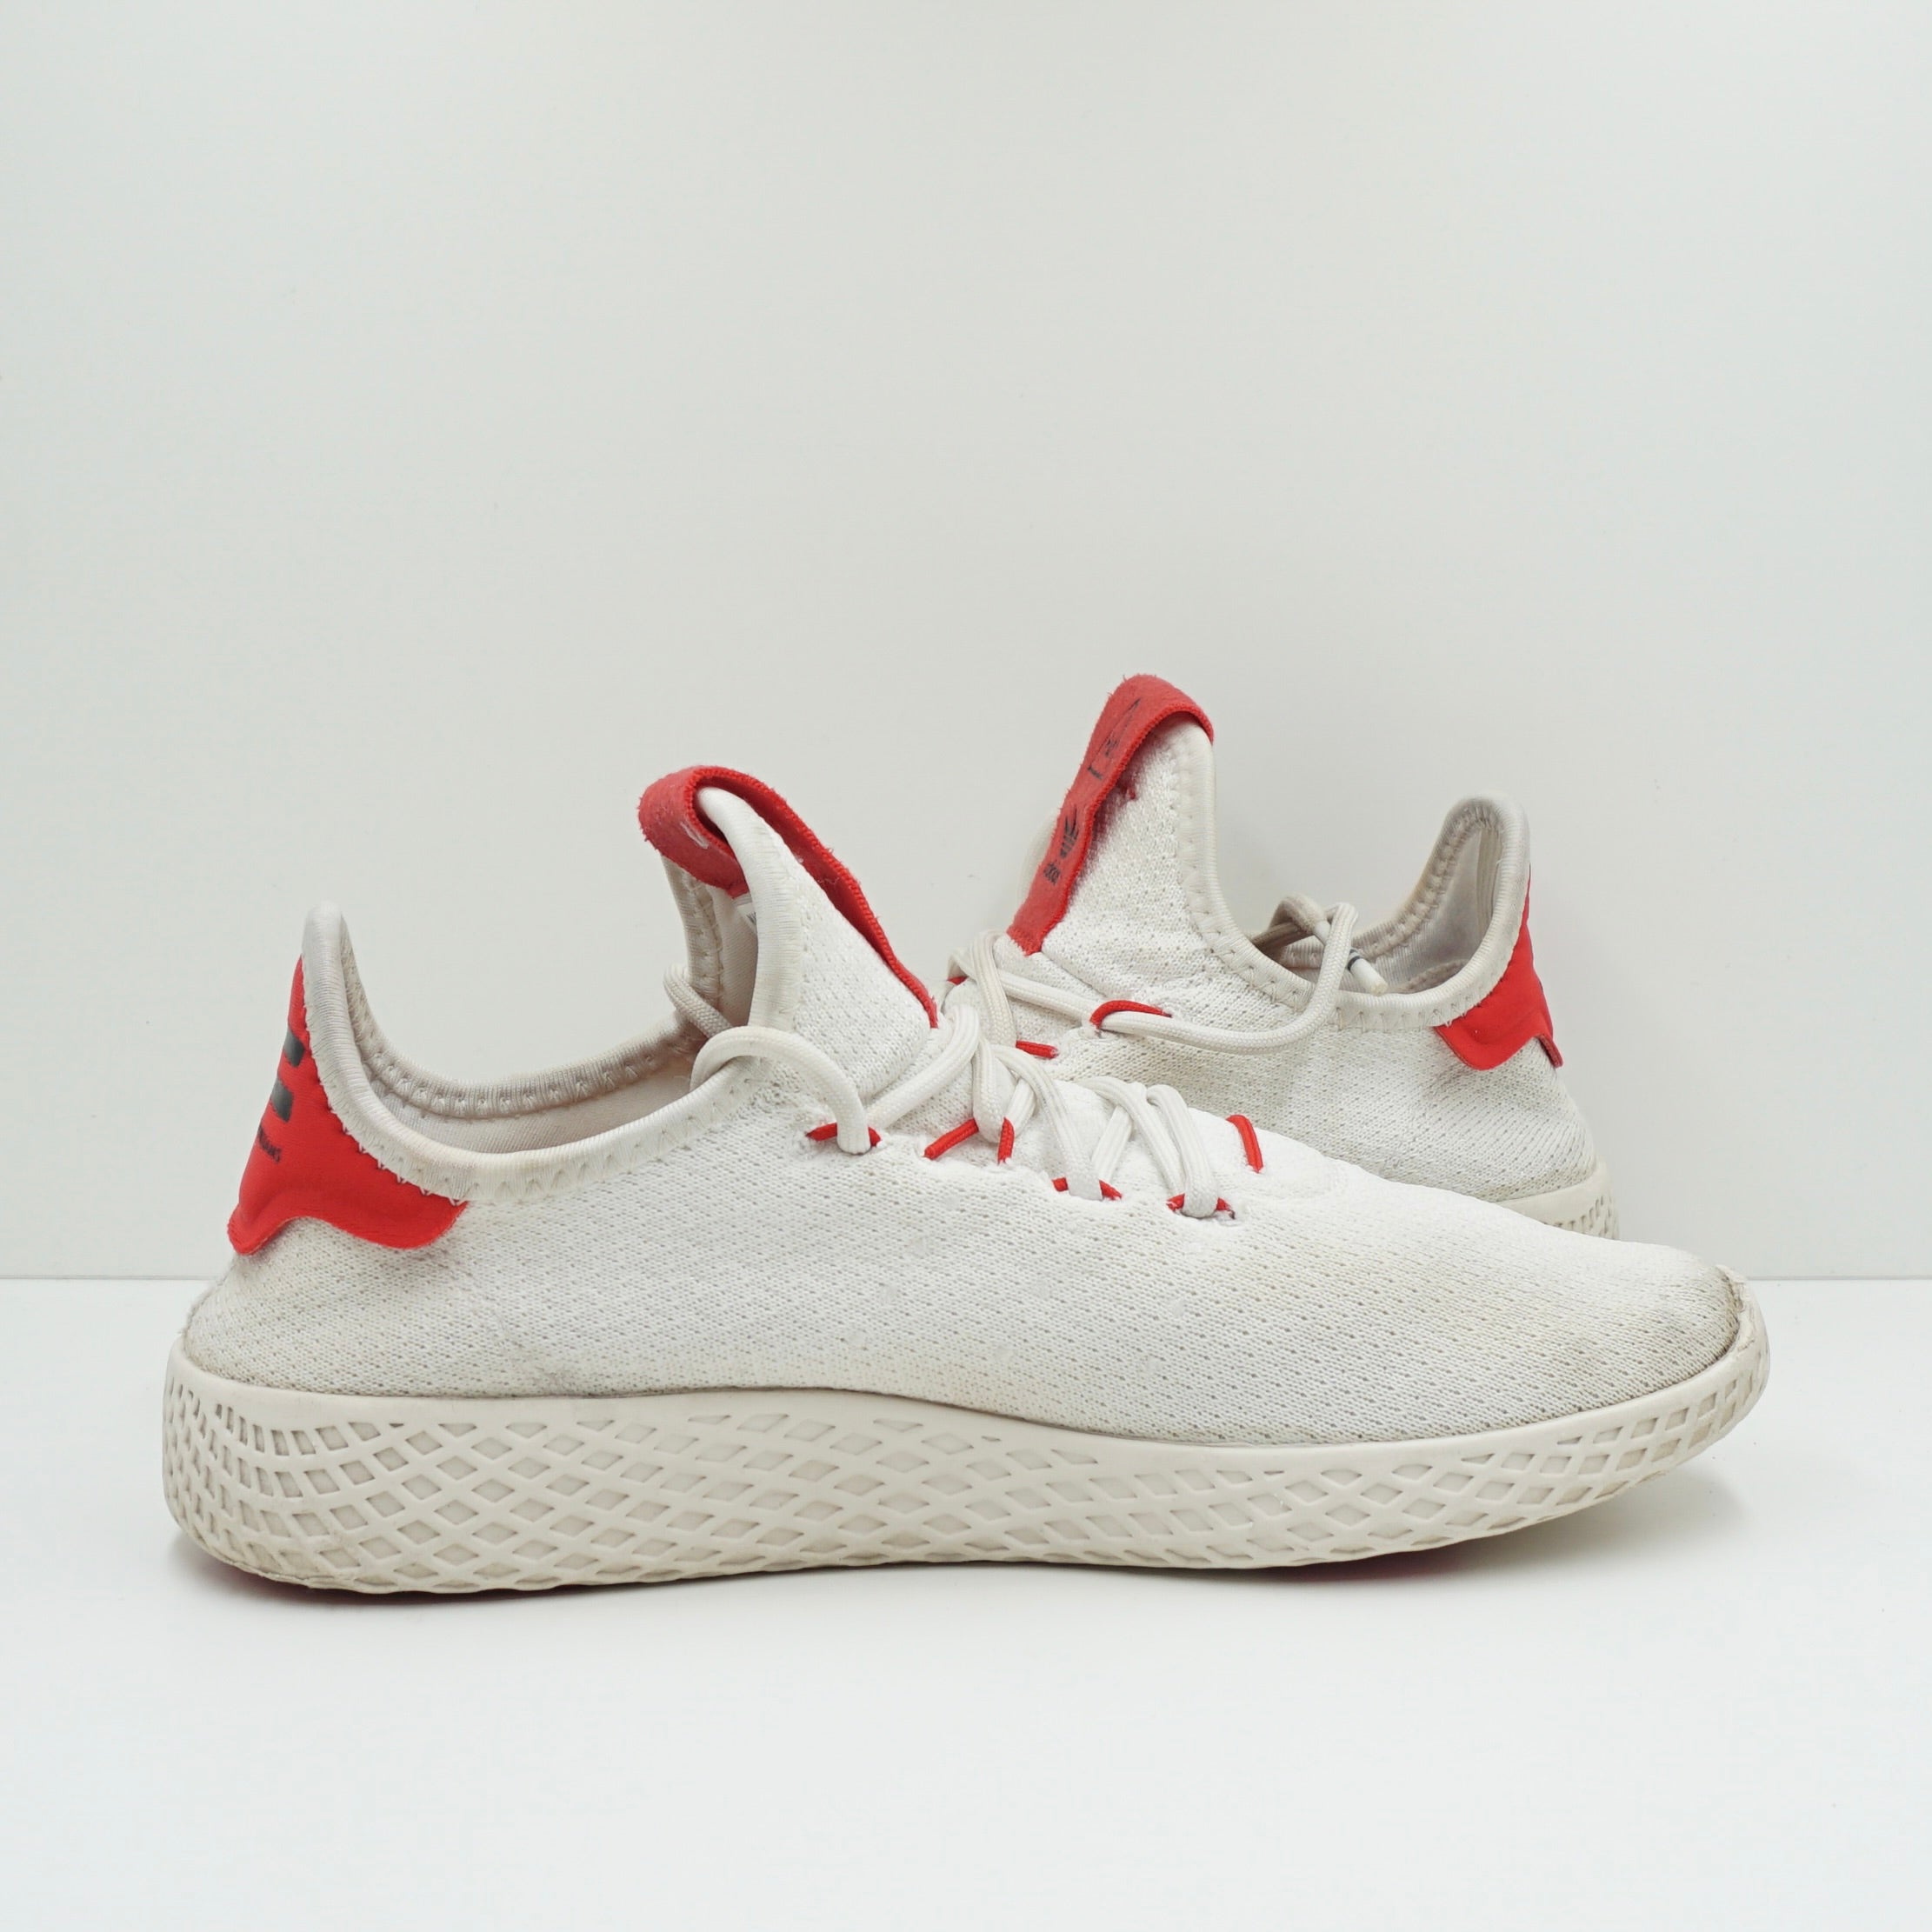 Adidas Tennis Hu Pharrell White Scarlet